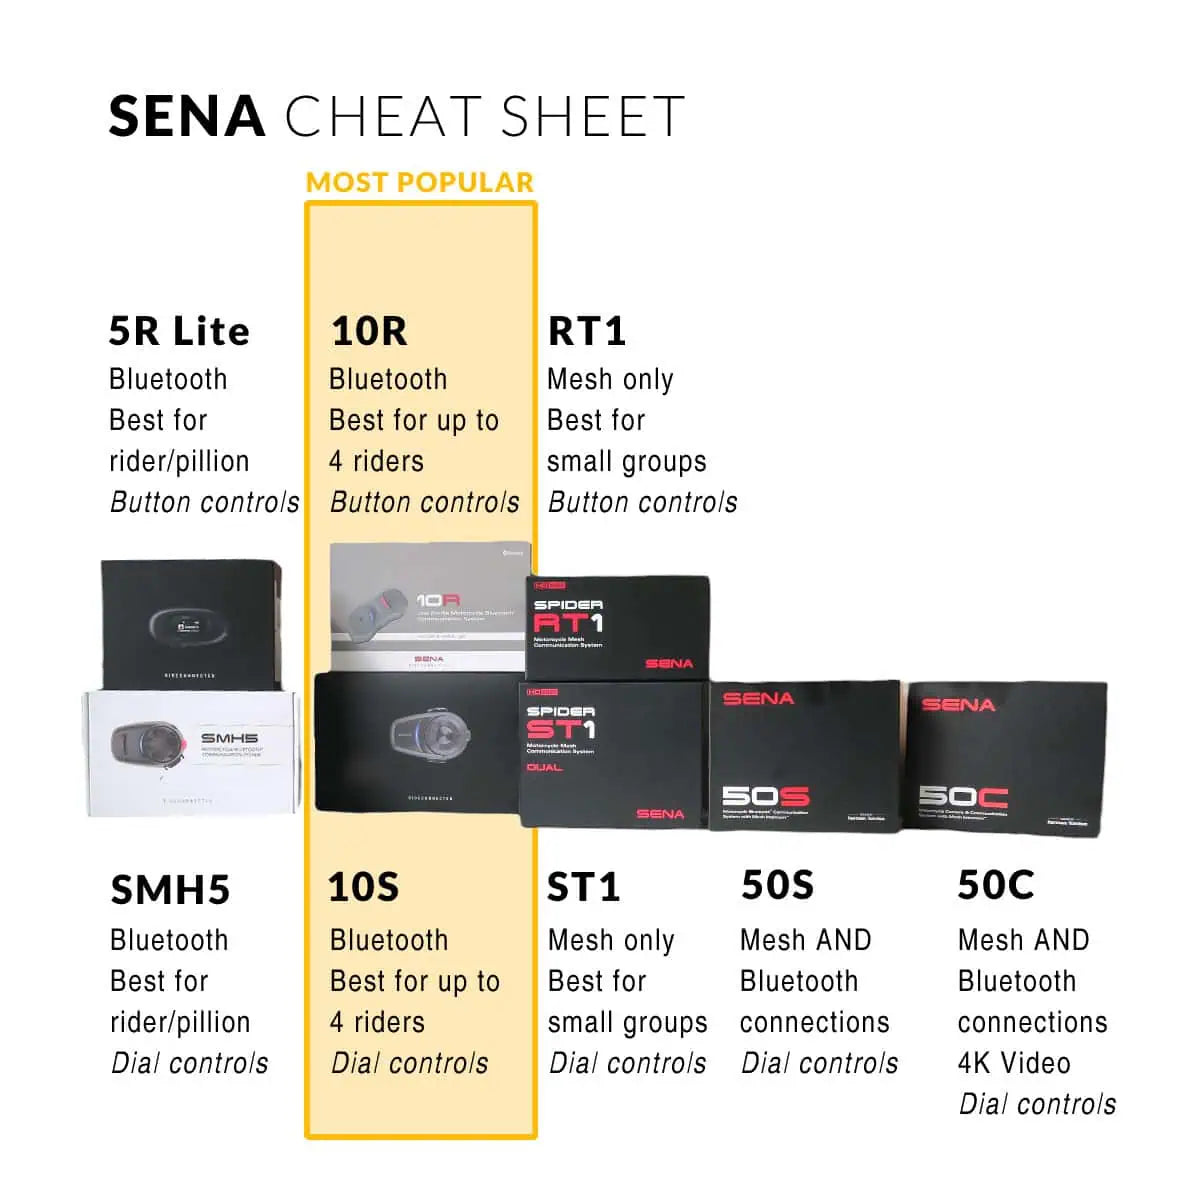 Sena cheat sheet - The GetGeared Guide to Sena Motorcycle Intercoms